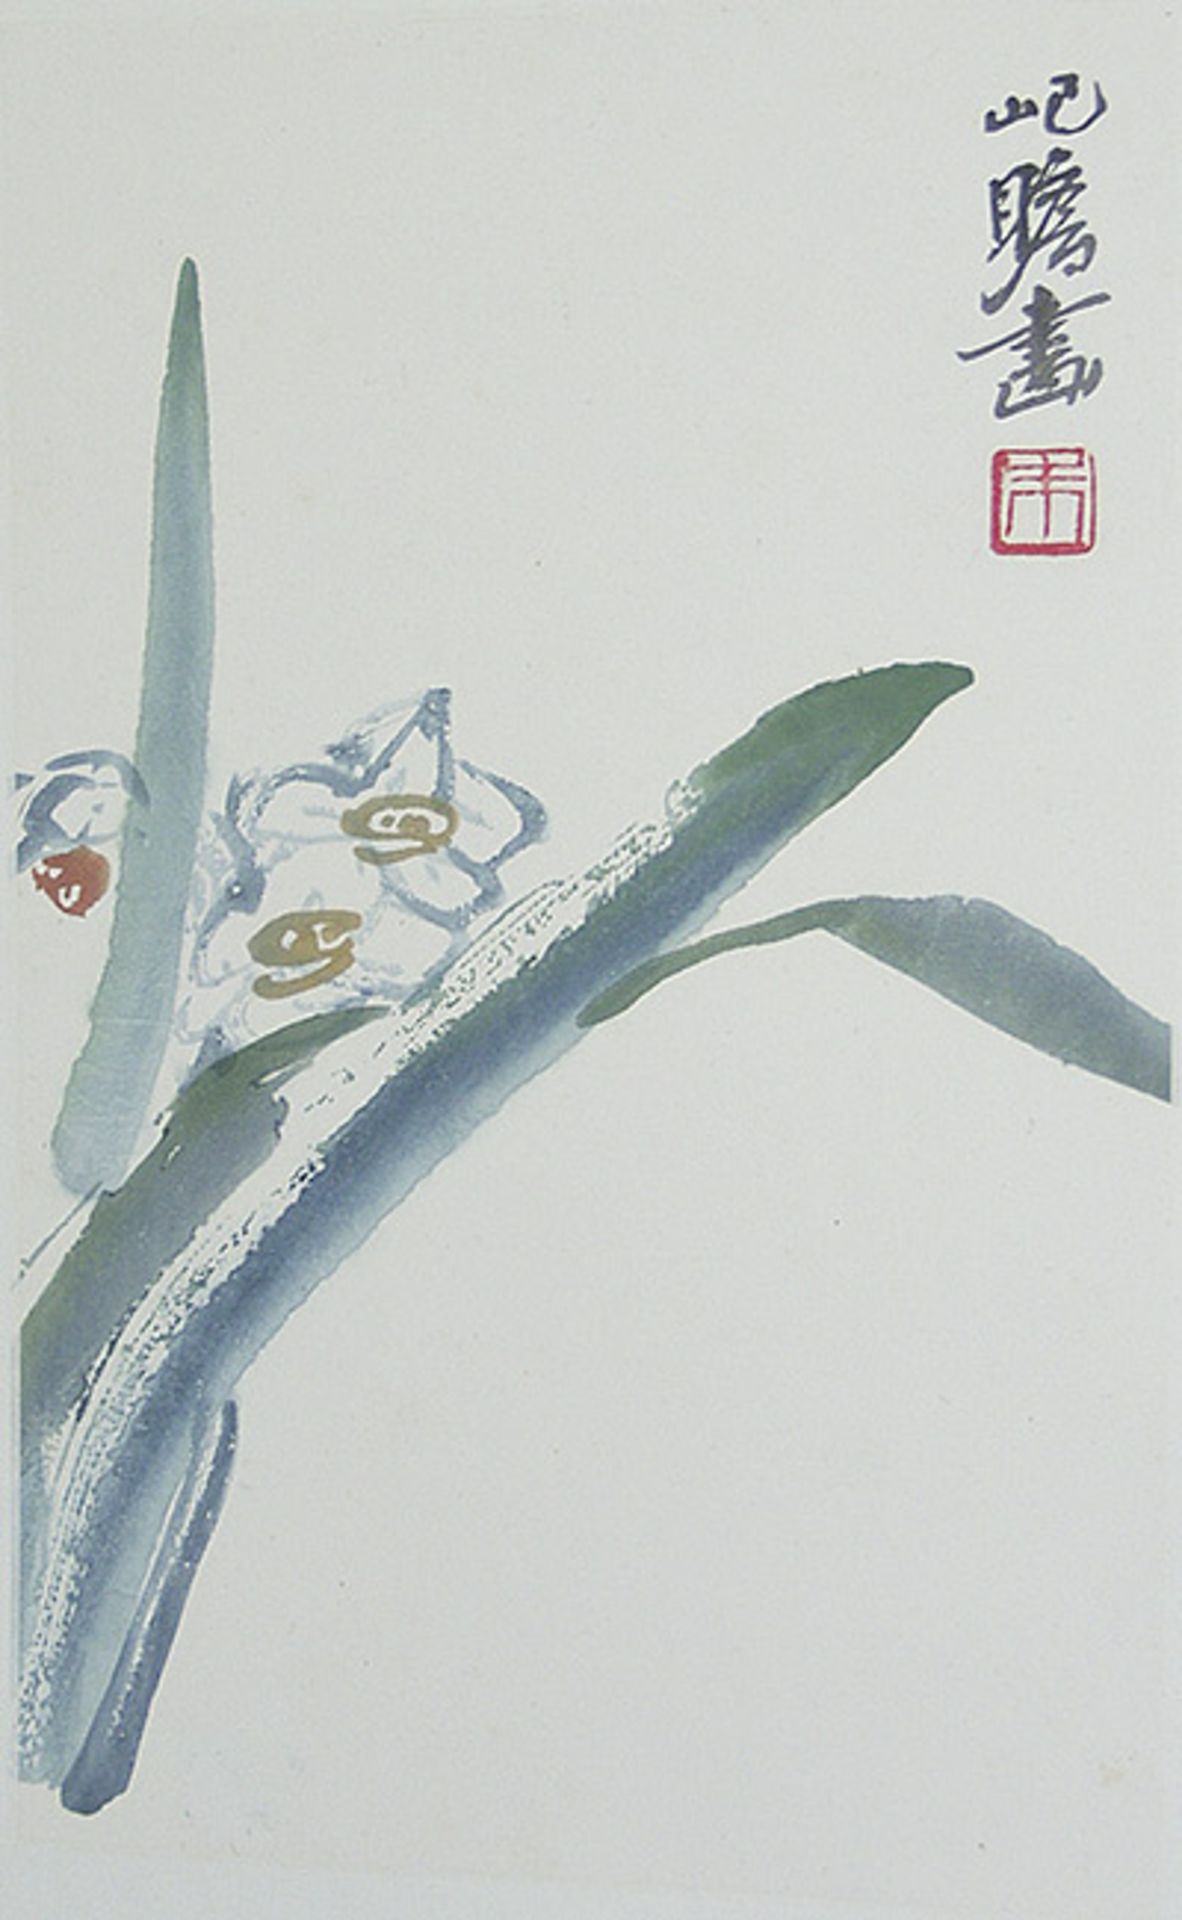 ZHU JIZHANG (20. JH.)
Aquarellfarben-Holzschnitt. China, 20th cent.Darstellung einer Narzisse mit